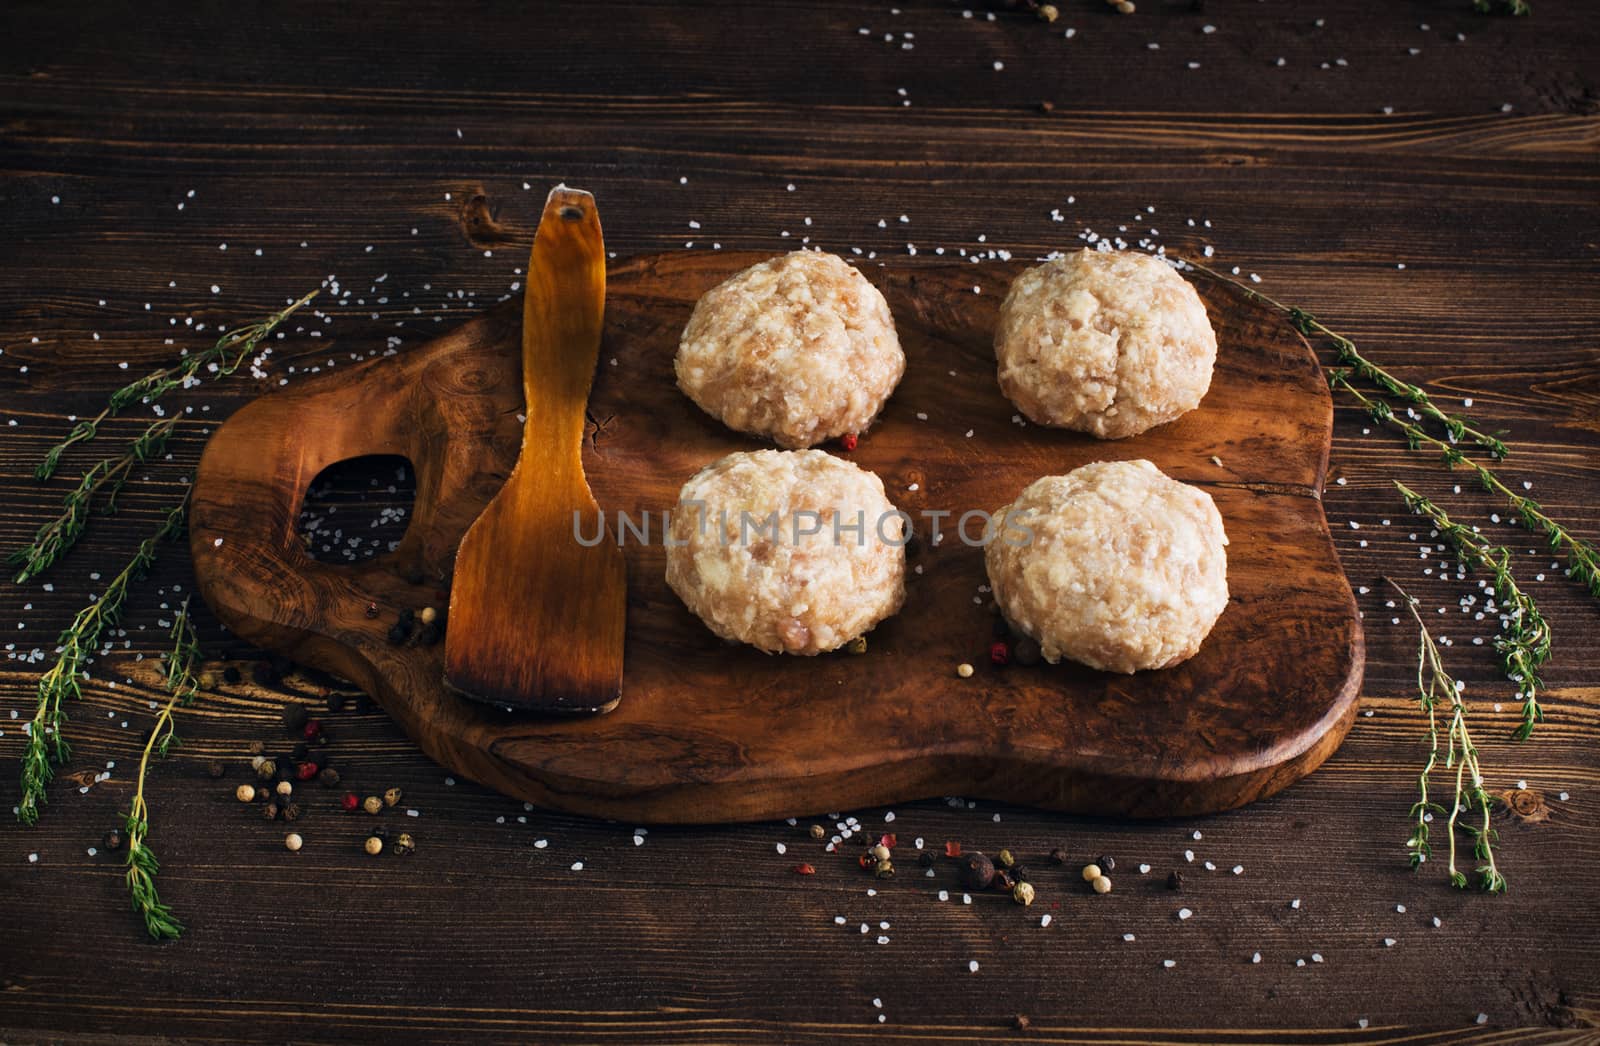 Uncooked meatballs in a dark rustic wooden setting